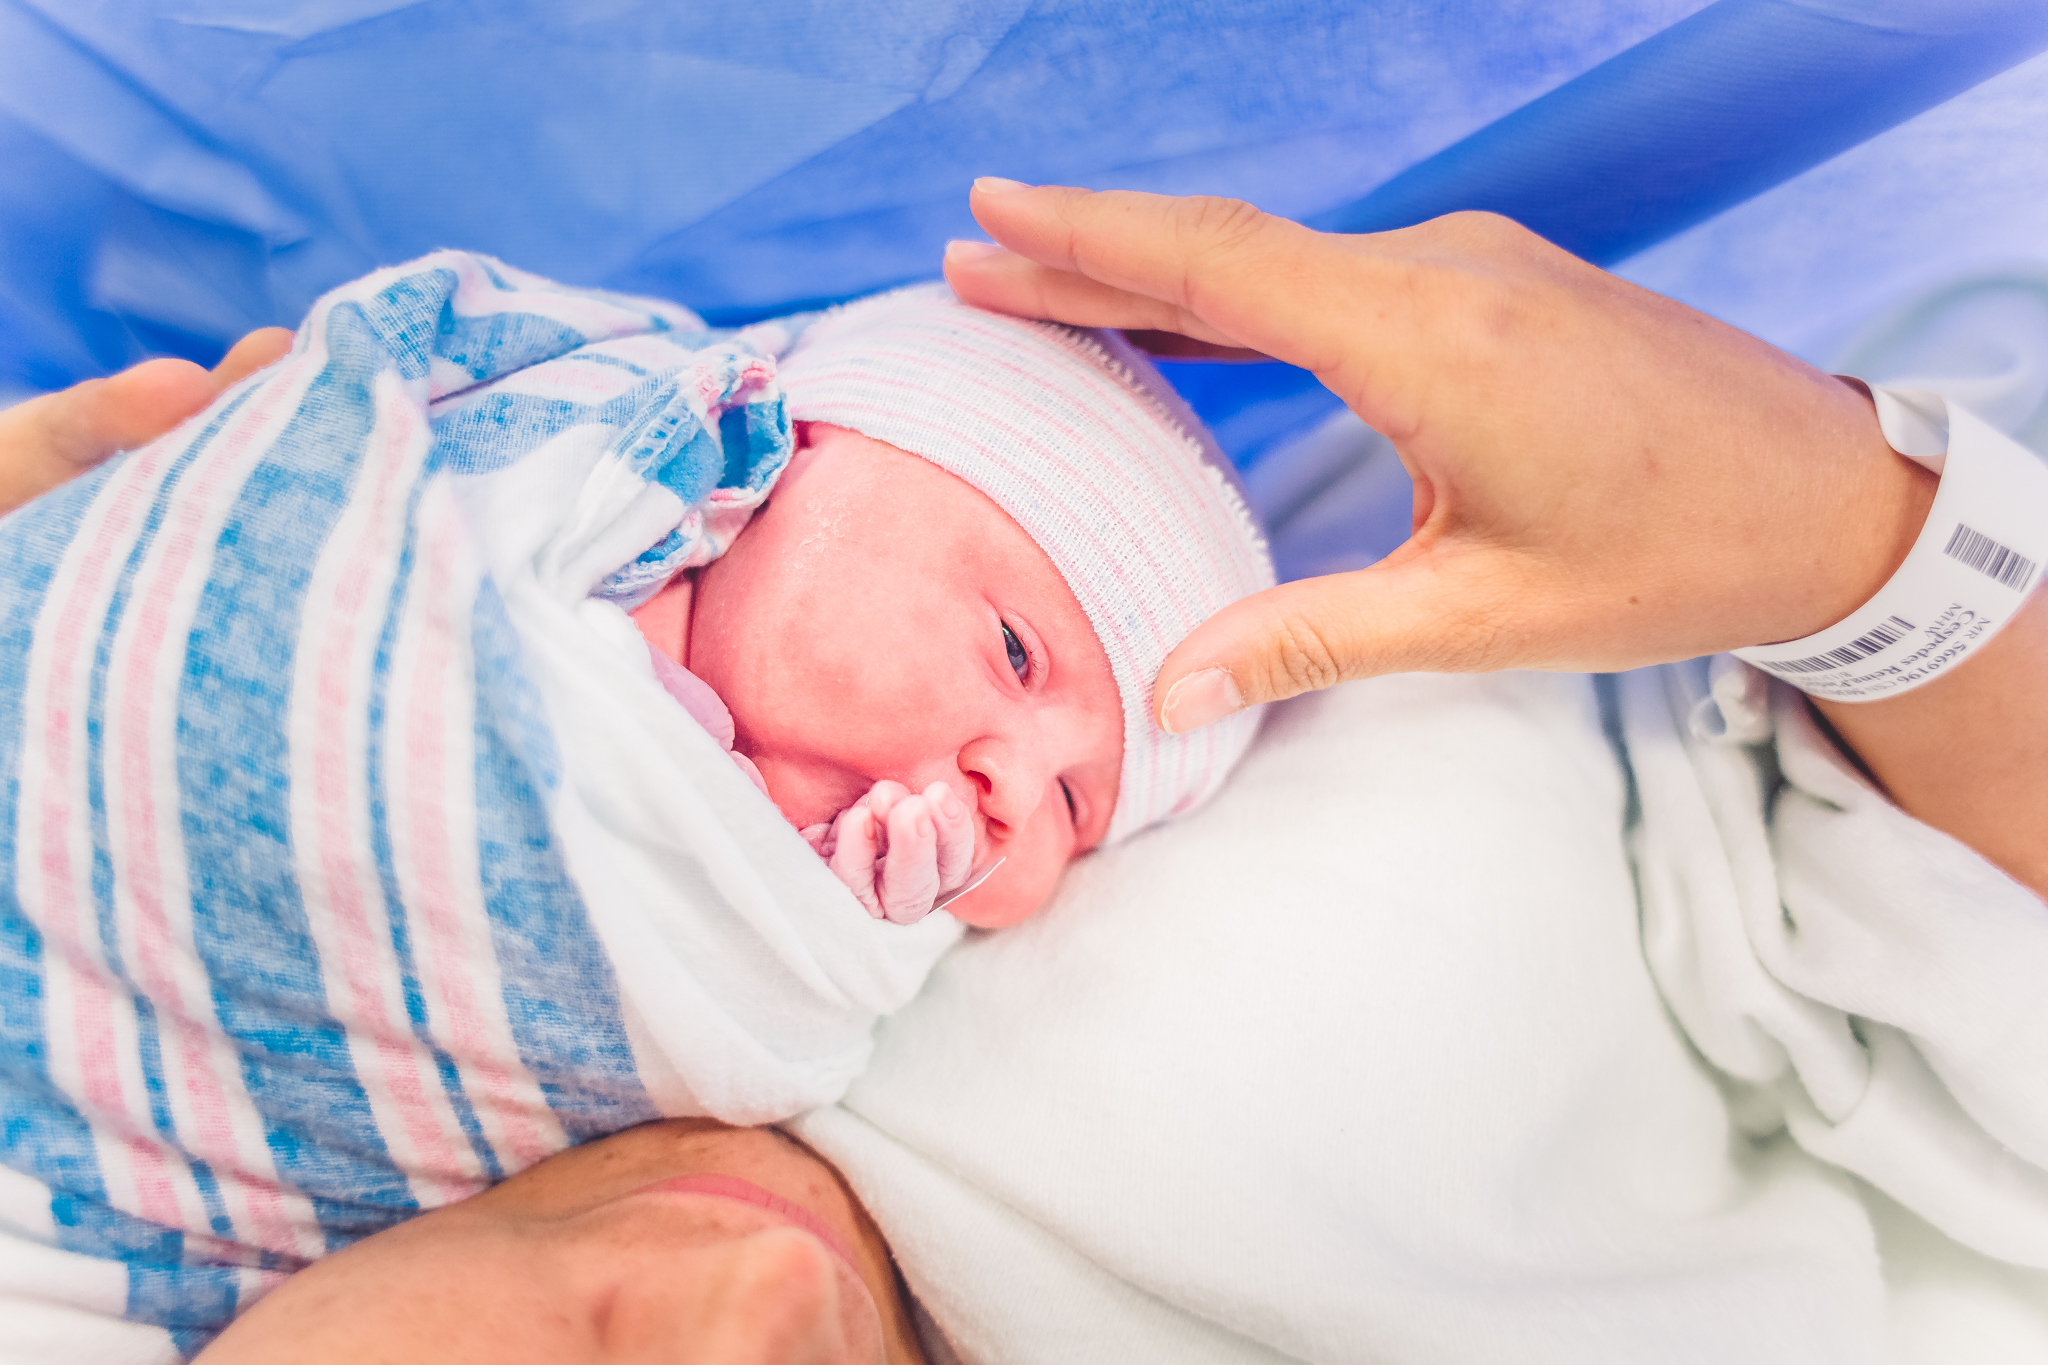 gentle cesarean birth photography and birth videography birth videographer boca raton florida-5.jpg